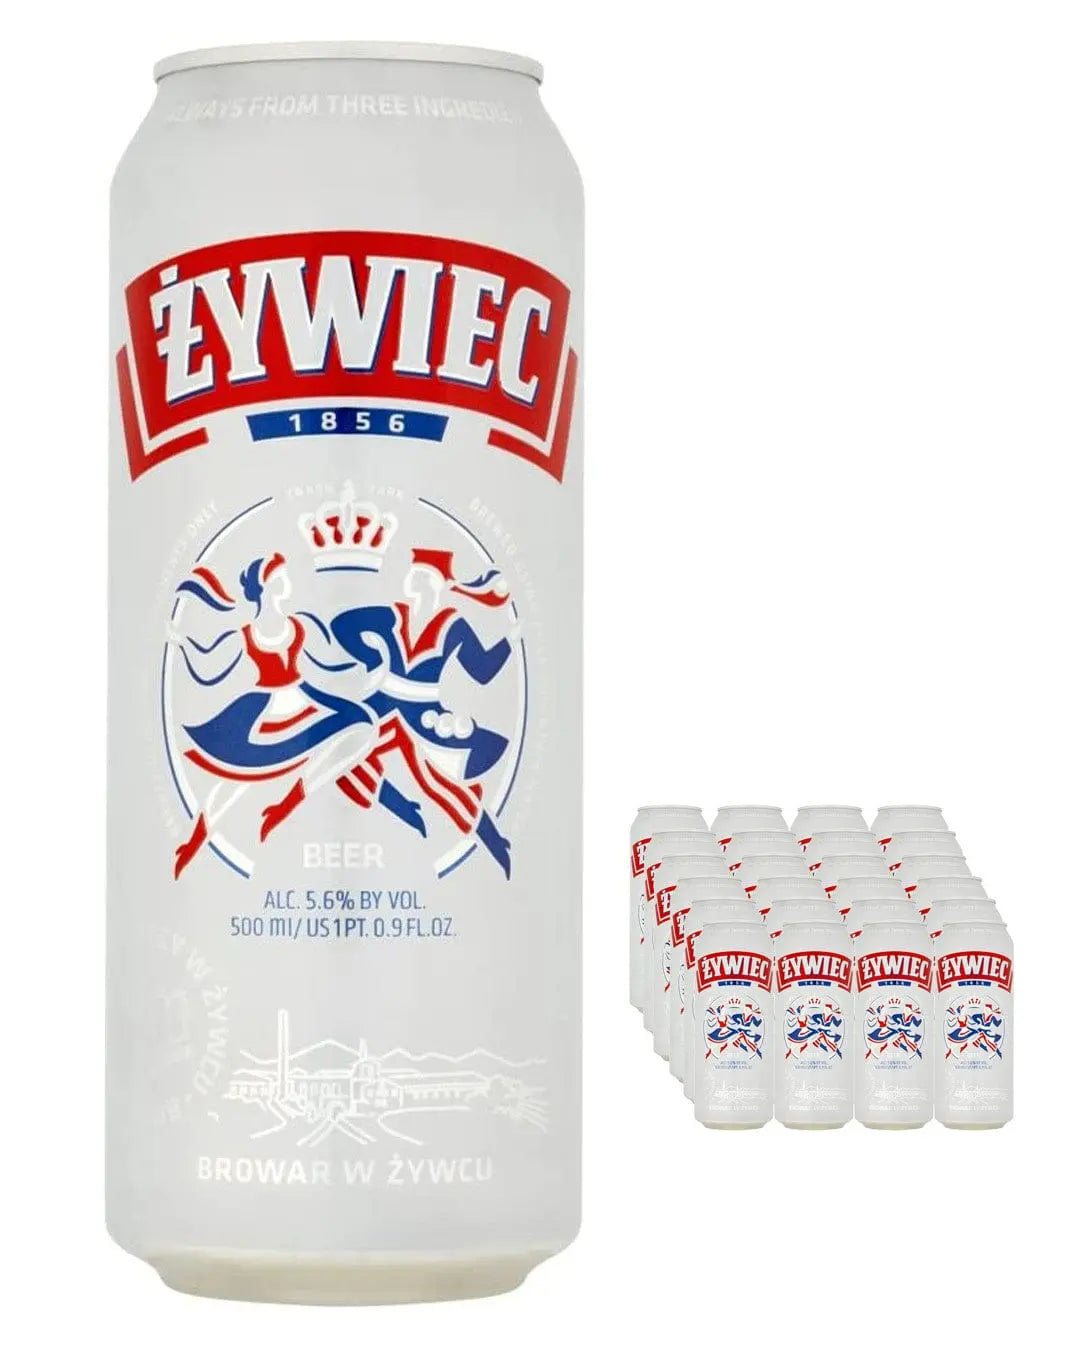 Zywiec Original Polish Lager Beer Multipack, 24 x 500 ml Beer